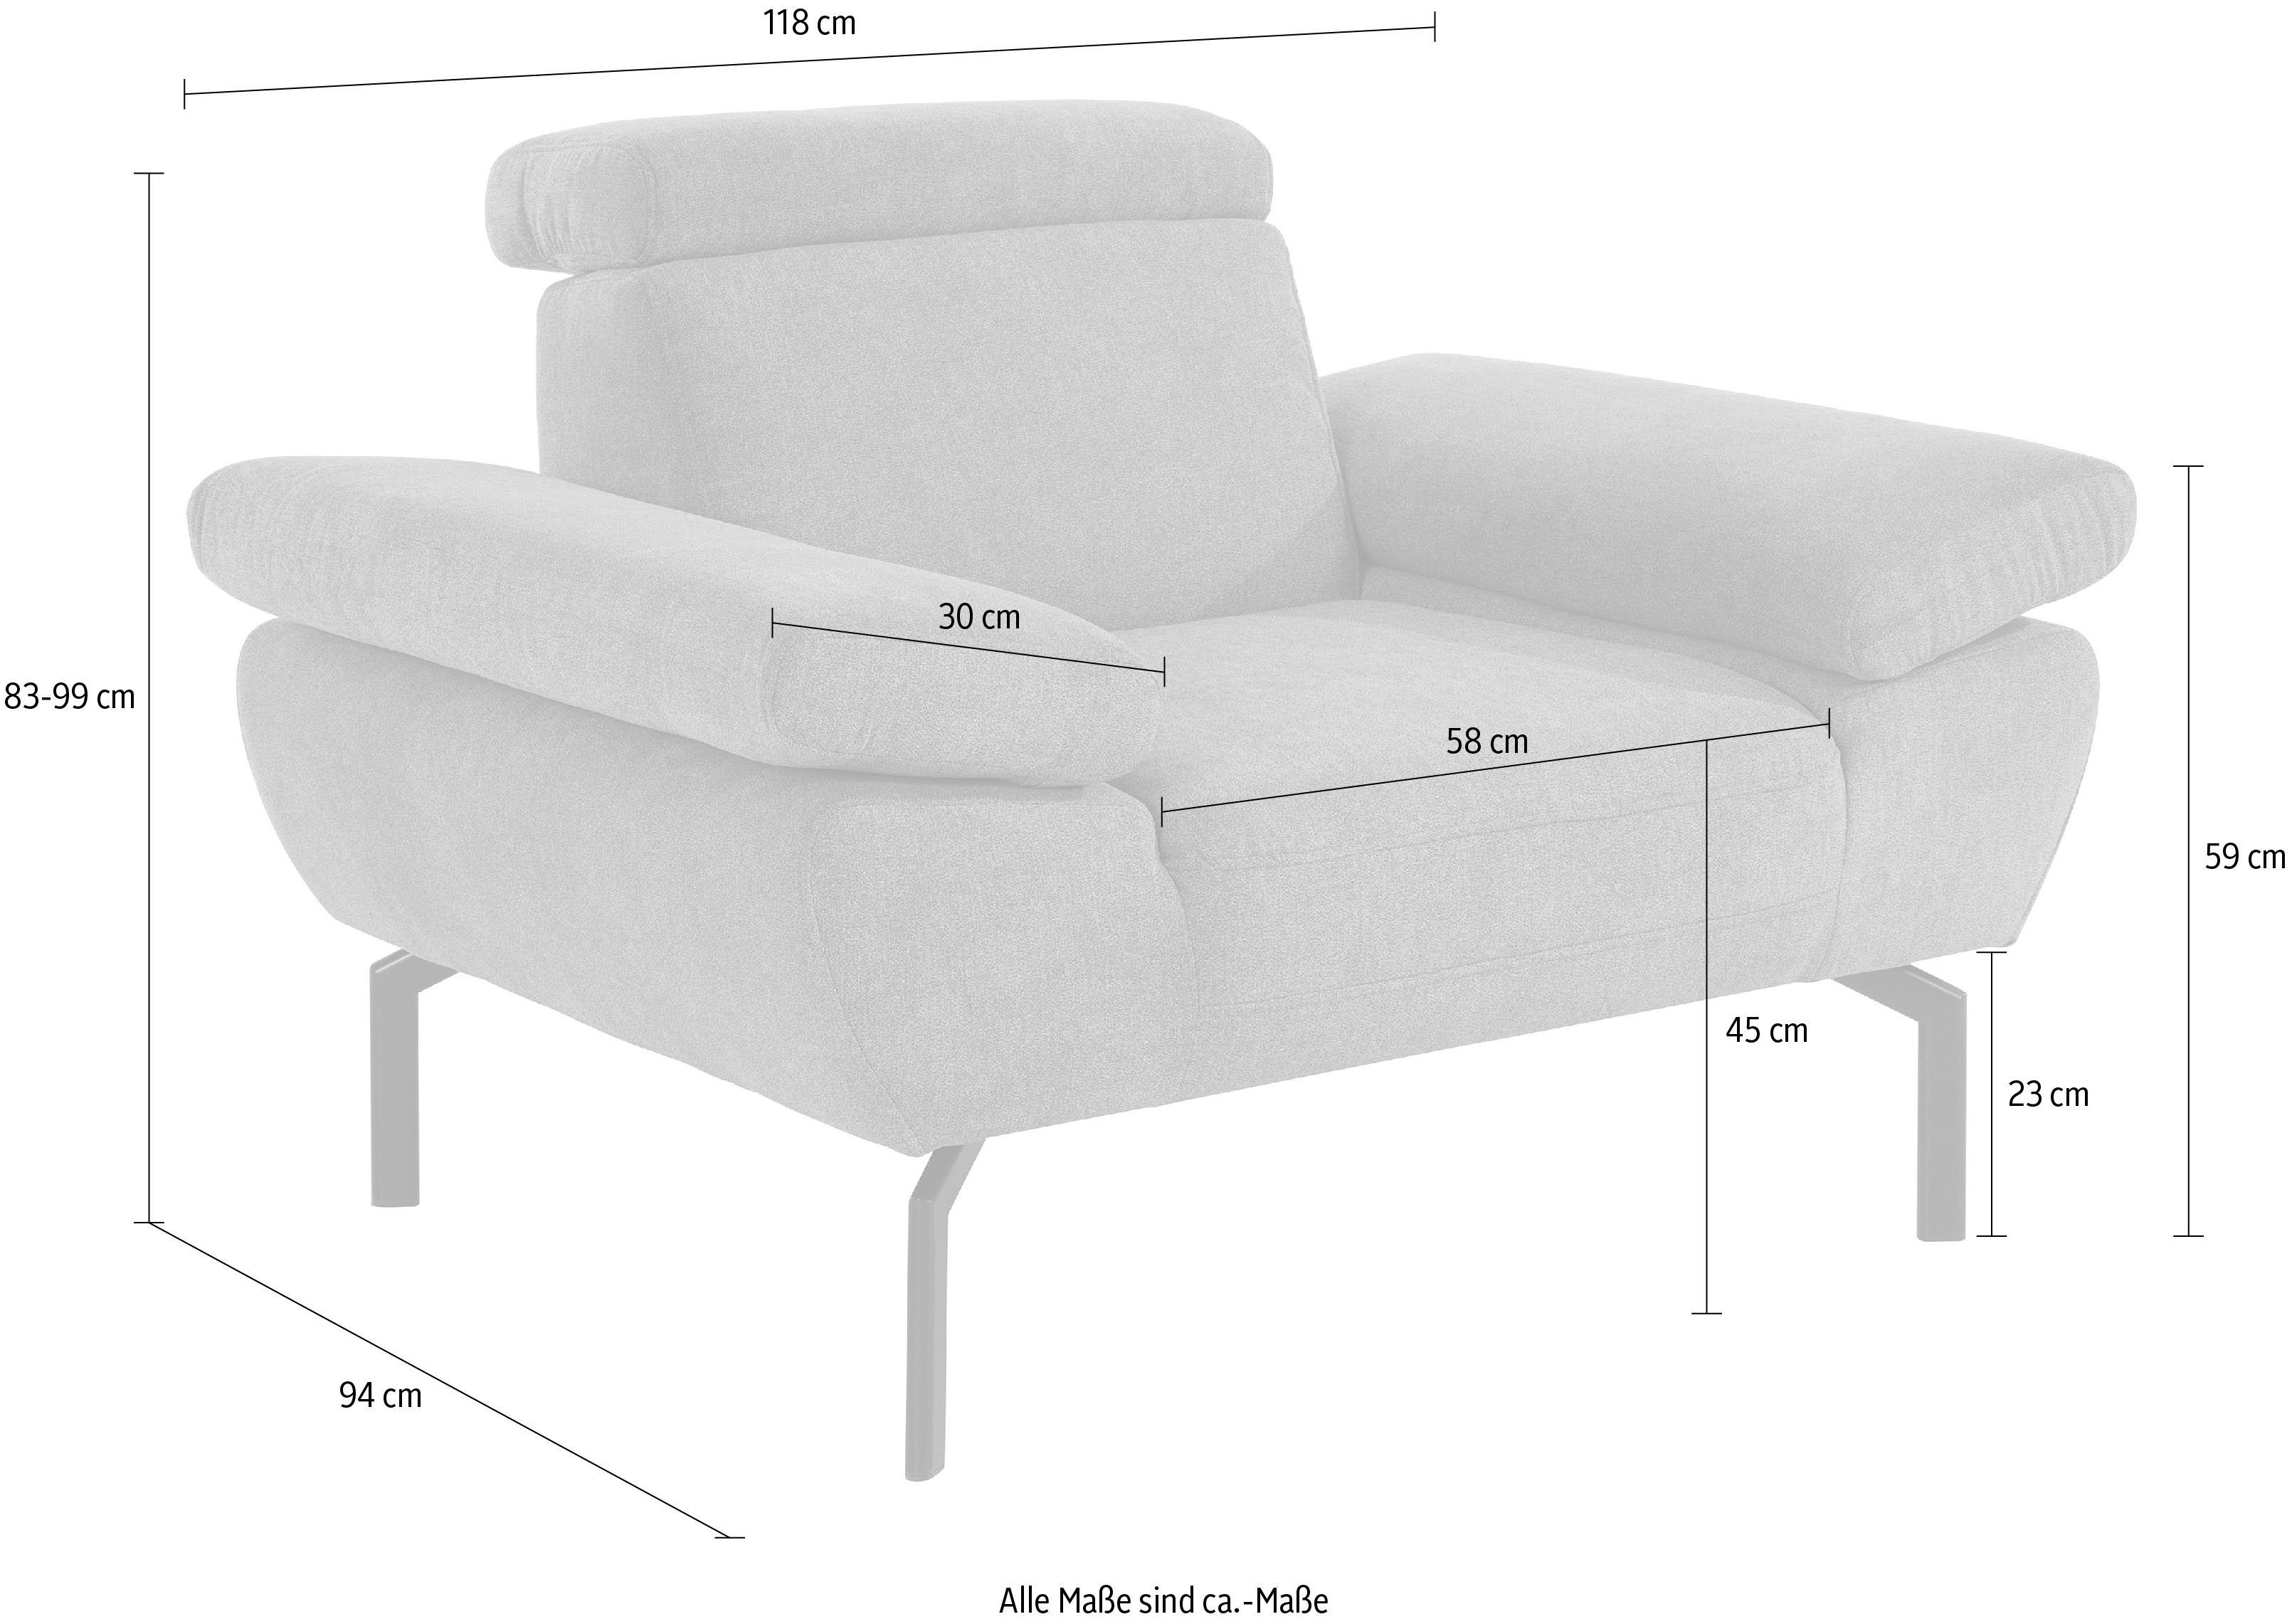 Places of Style Sessel Lederoptik mit Rückenverstellung, Luxus-Microfaser in Trapino wahlweise Luxus